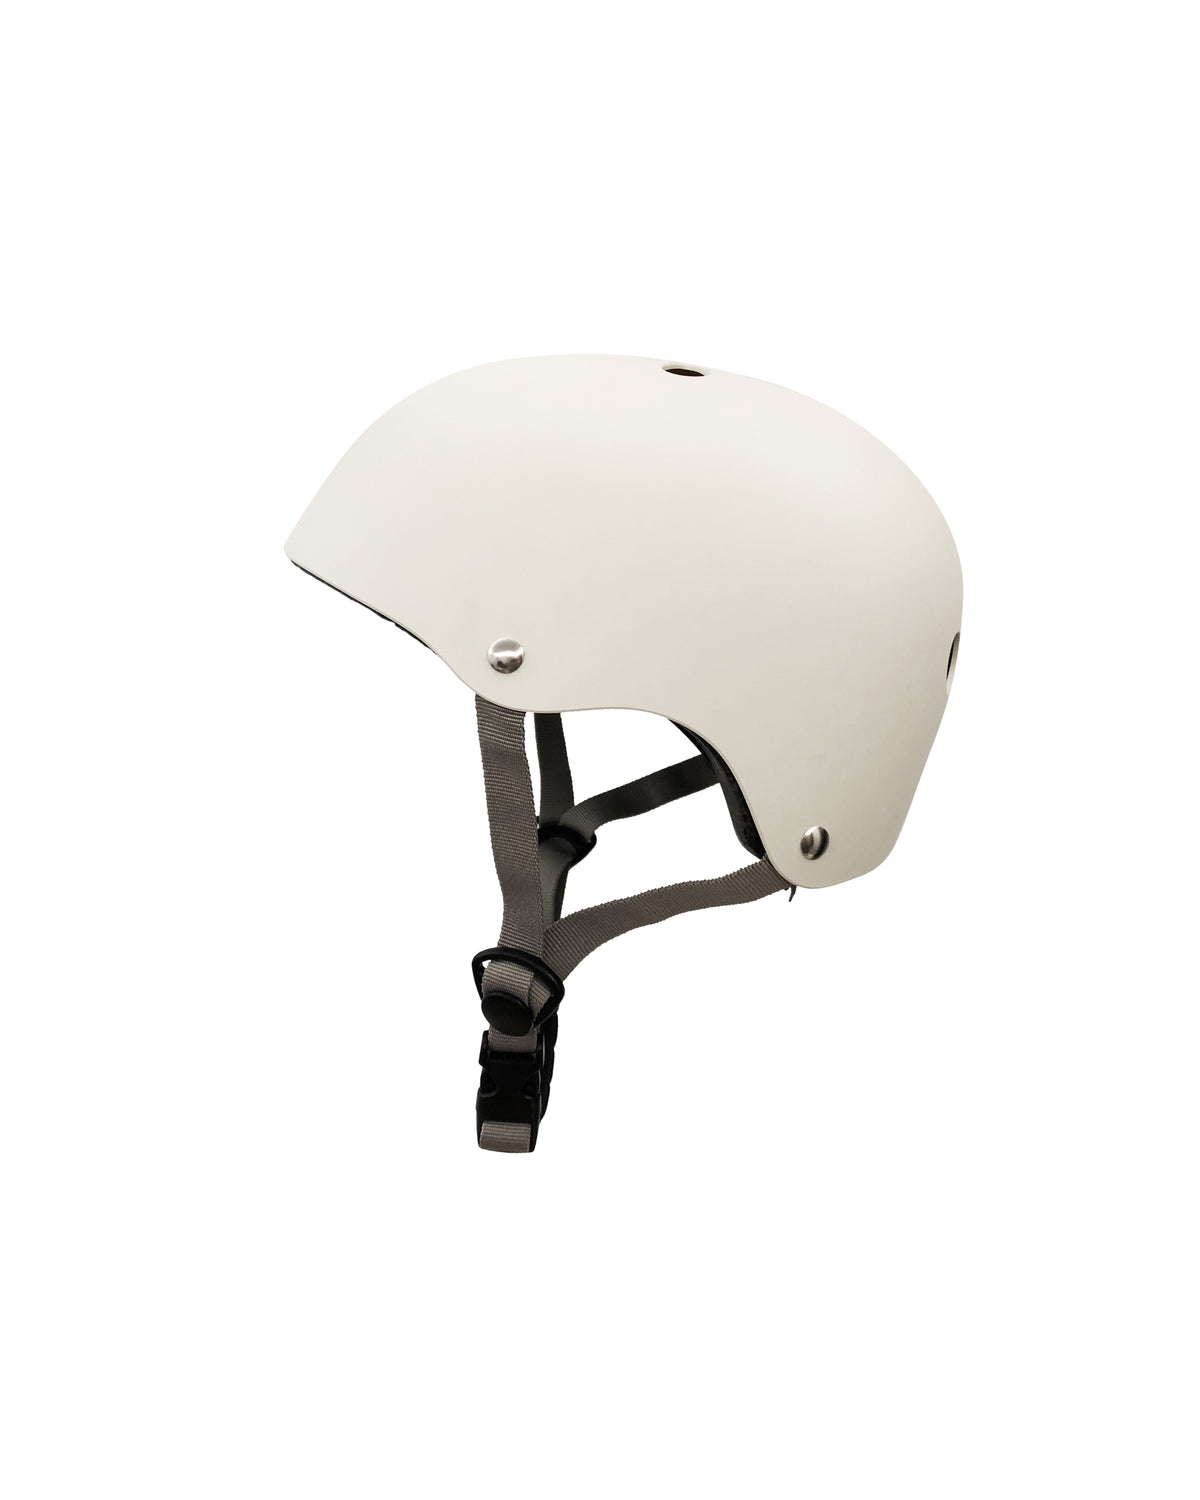 Ride-On Balance Bike Ivory White + Helmet